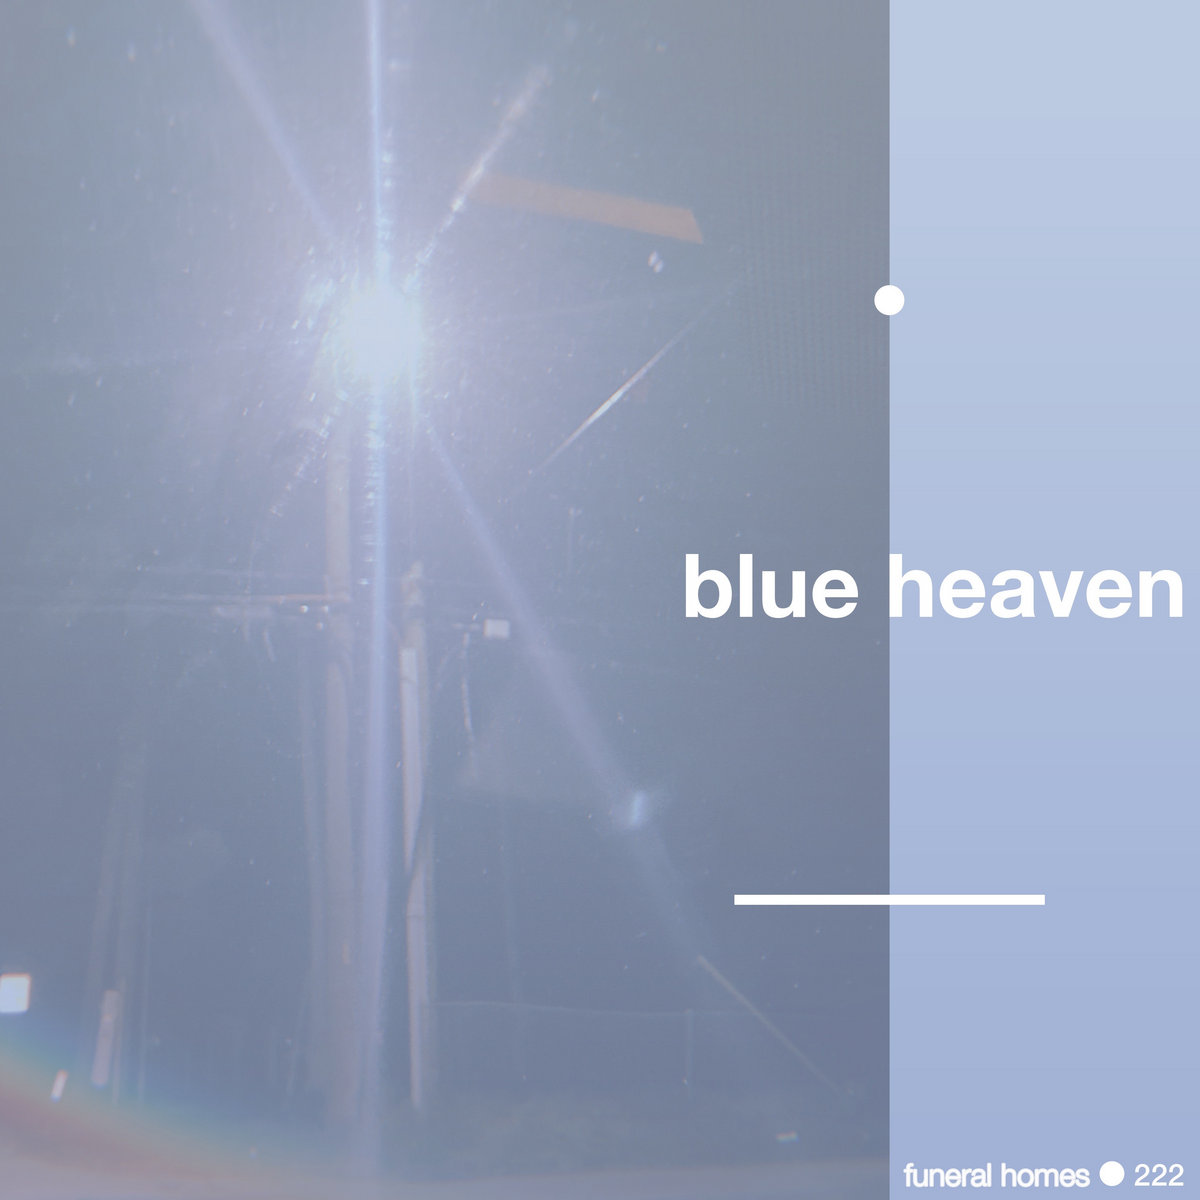 Album Review: Funeral Homes’ ‘Blue Heaven’